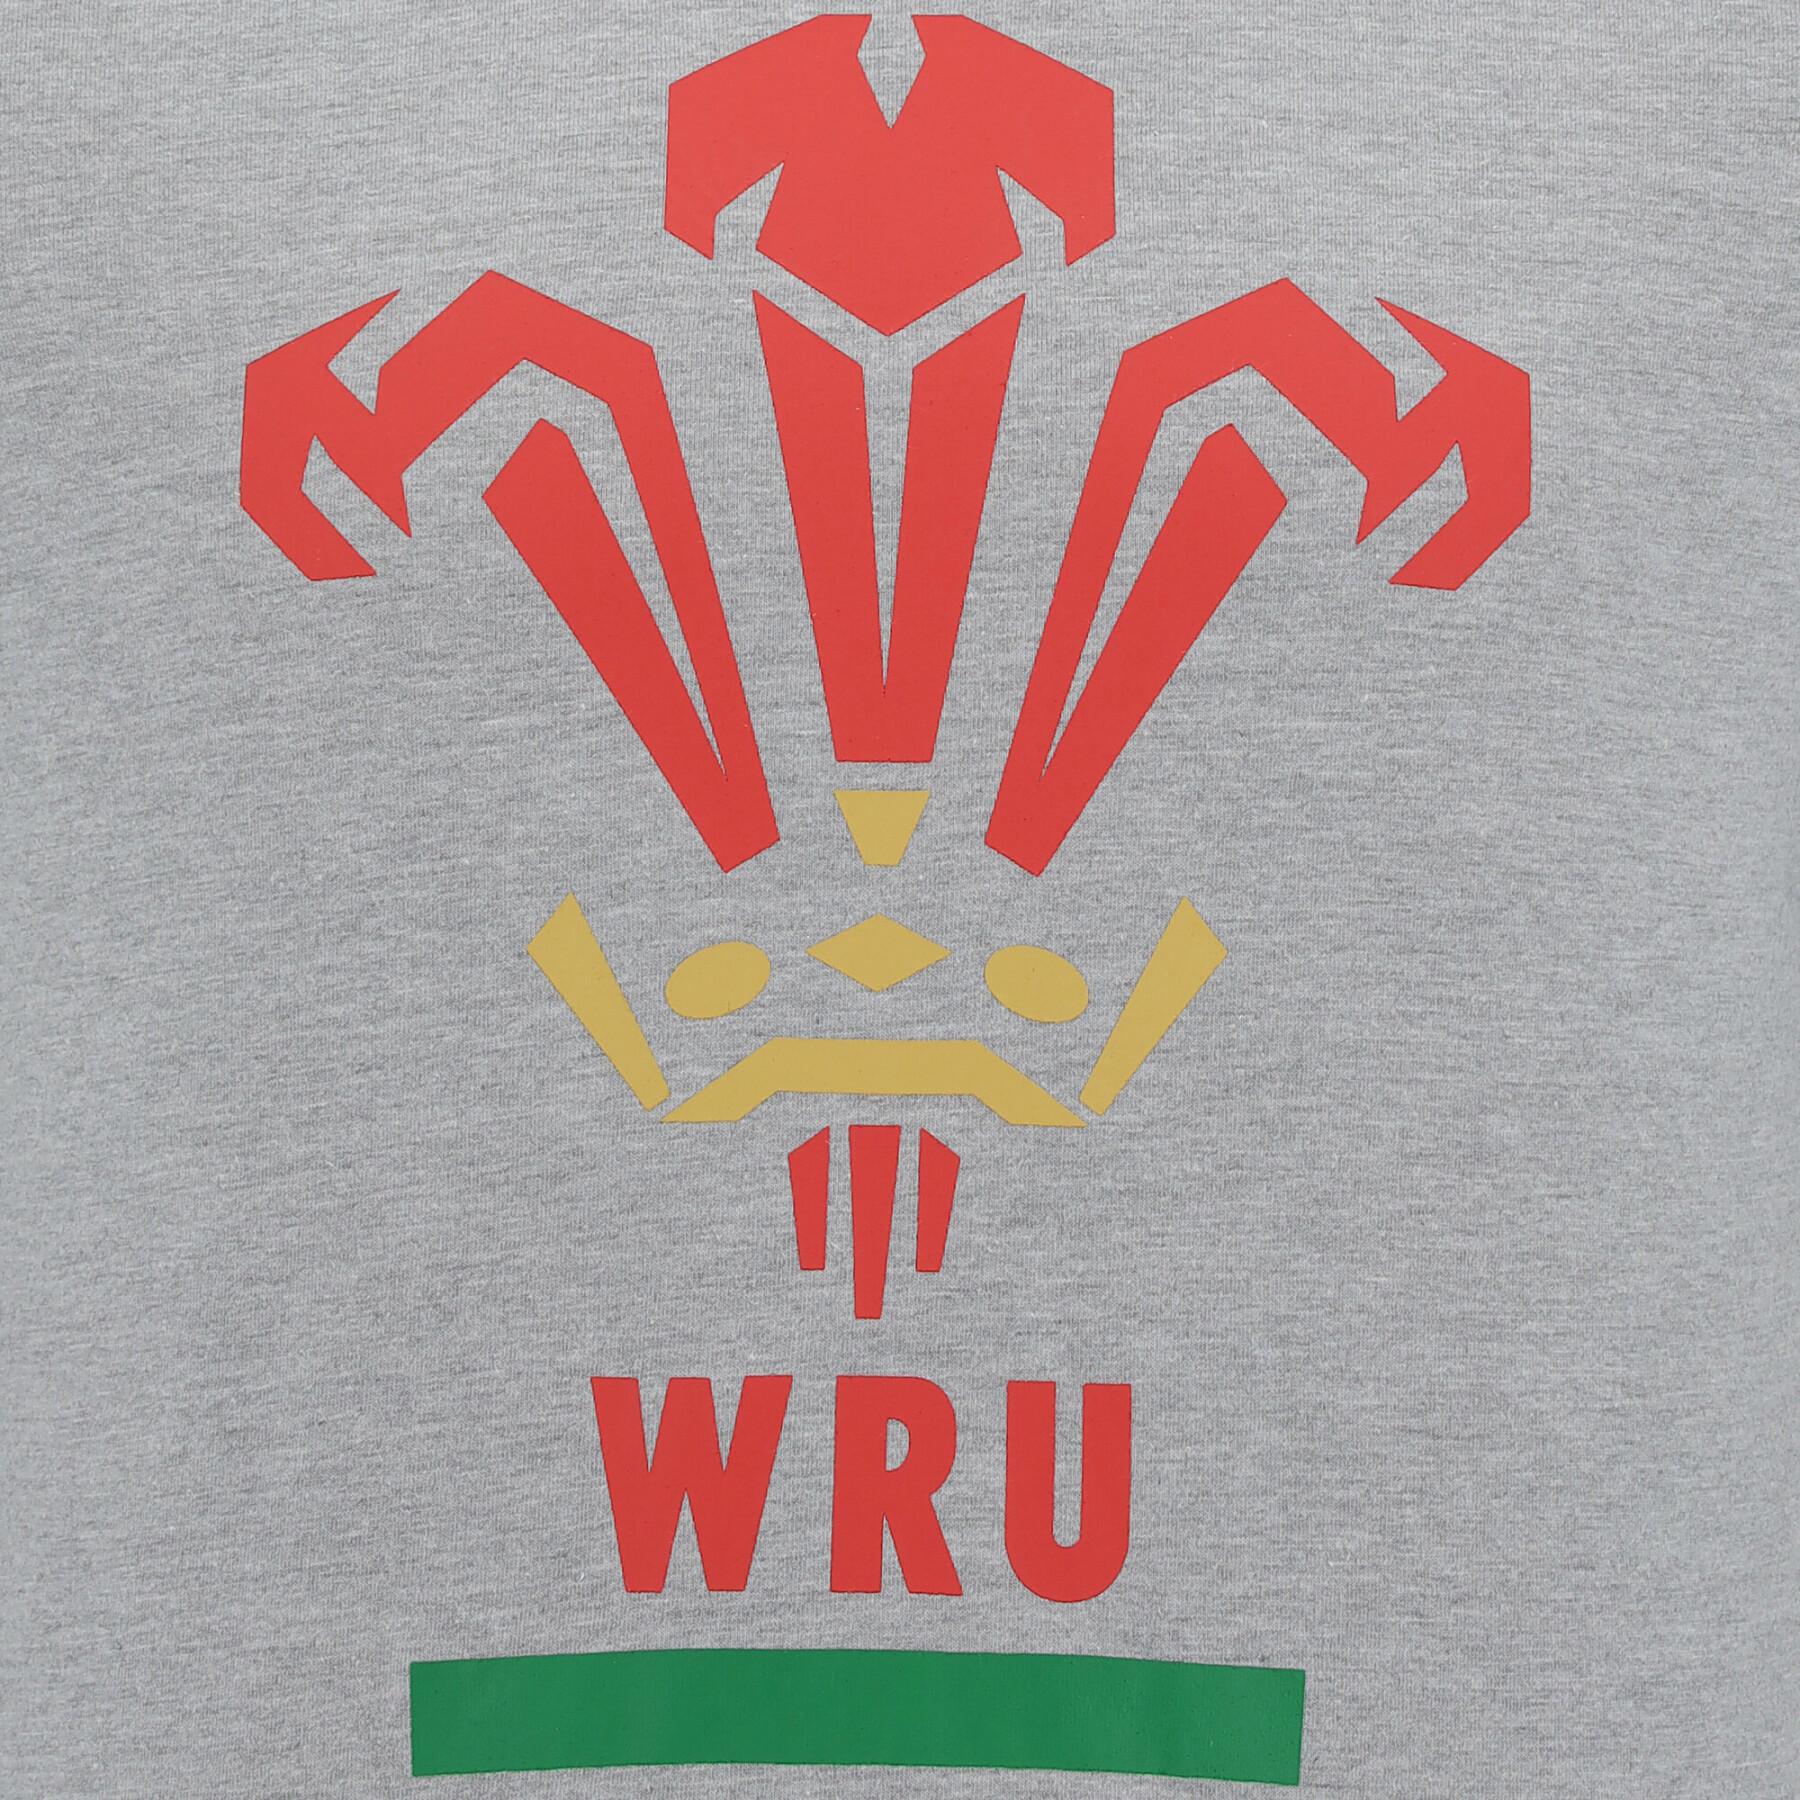 T-shirt Cotone Pays de Galles Rugby XV 2020/21